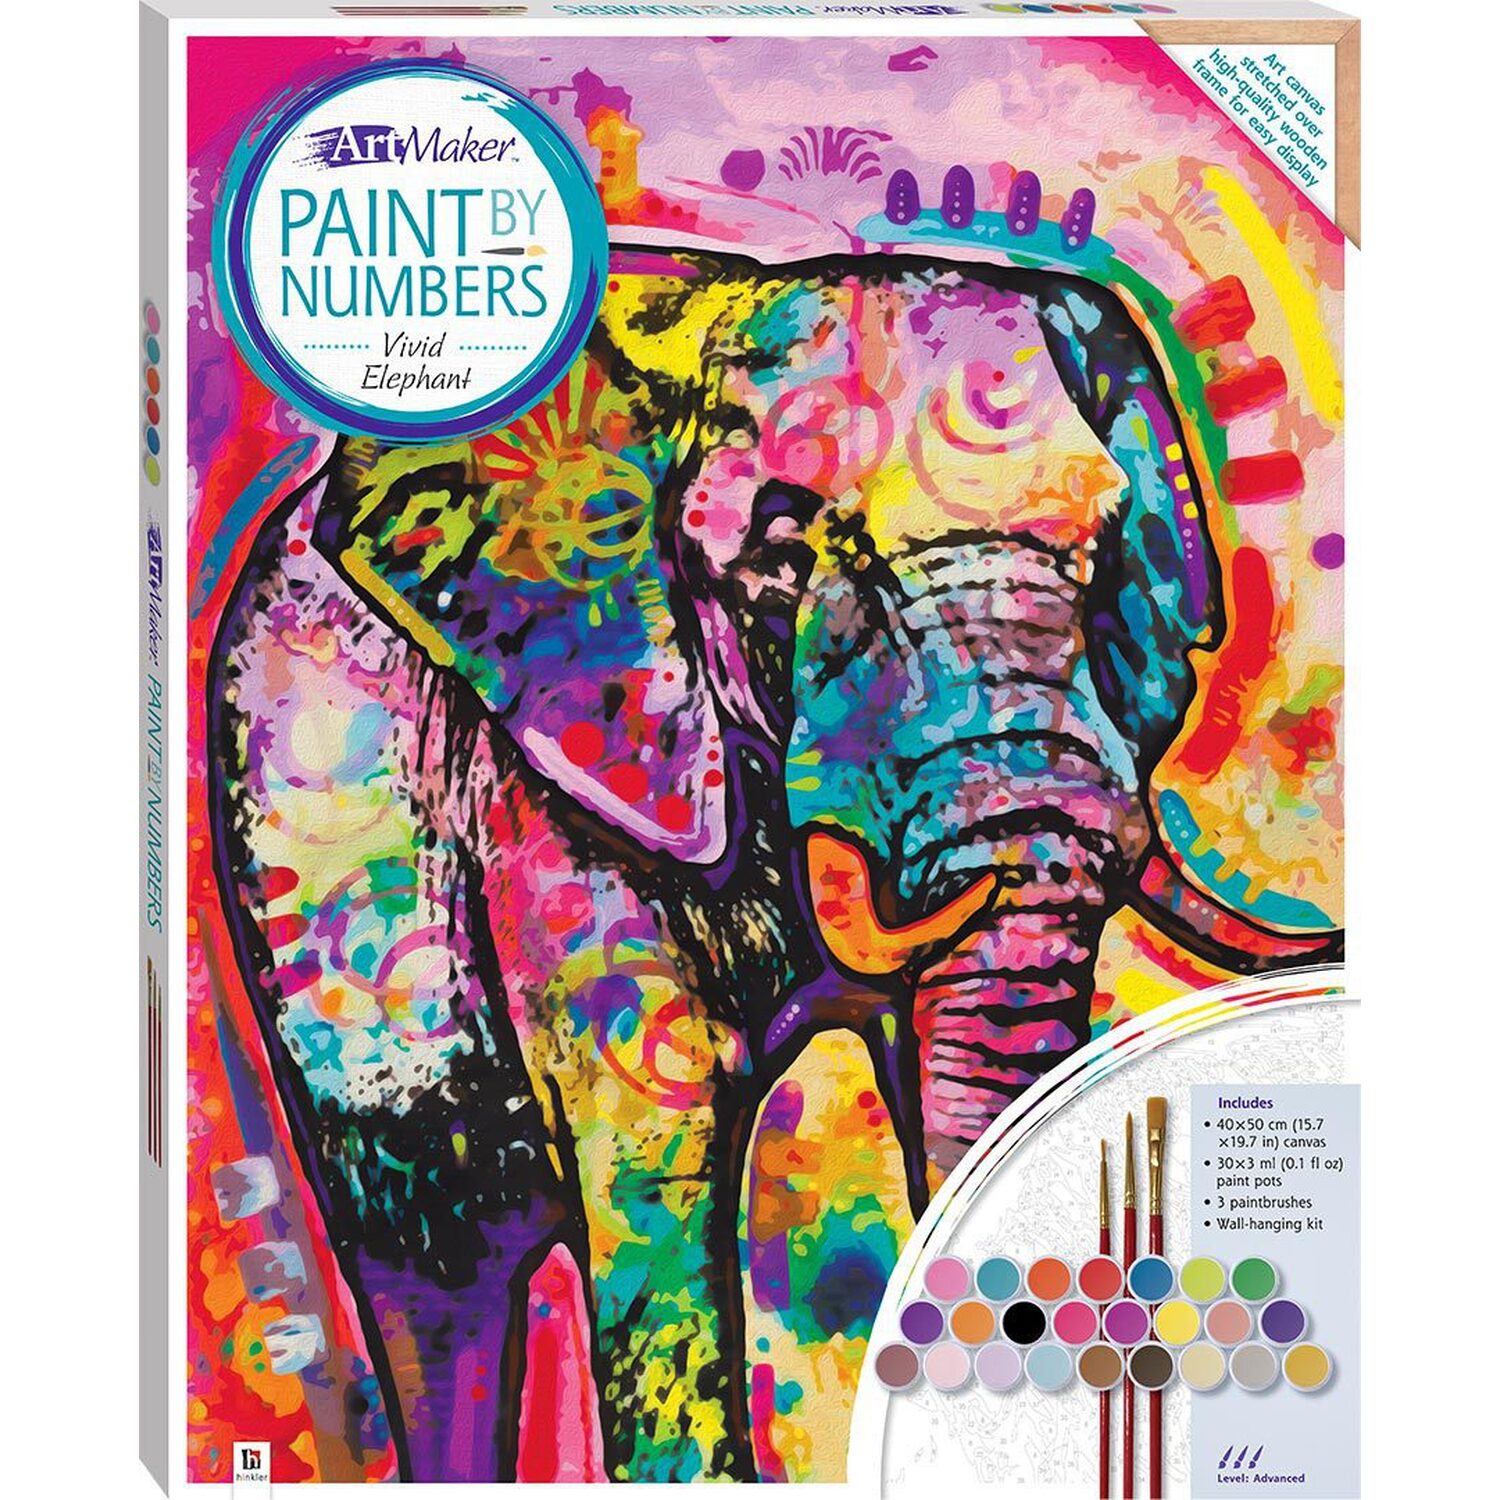 Hinkler Paint by Numbers Vivid Elephant Canvas Kit Image